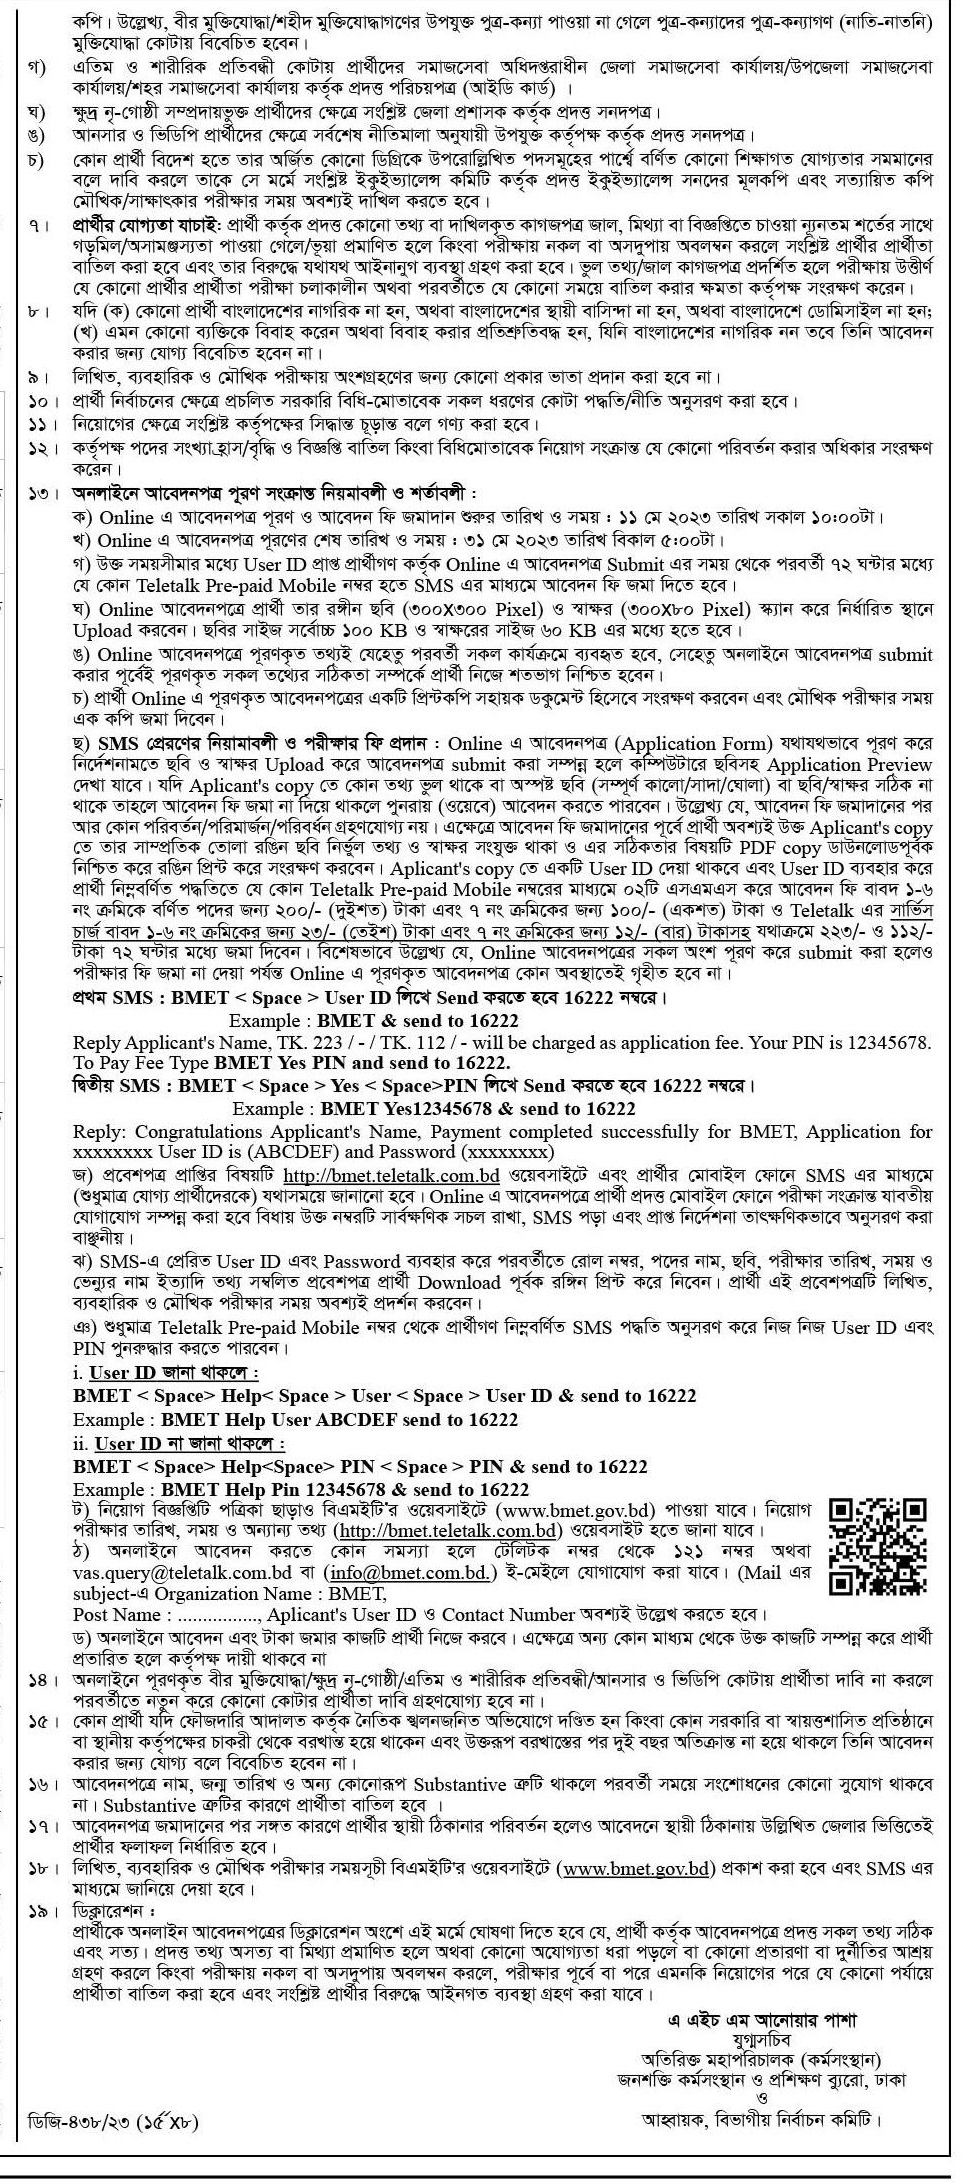 bmet.teletalk.com.bd Online Apply